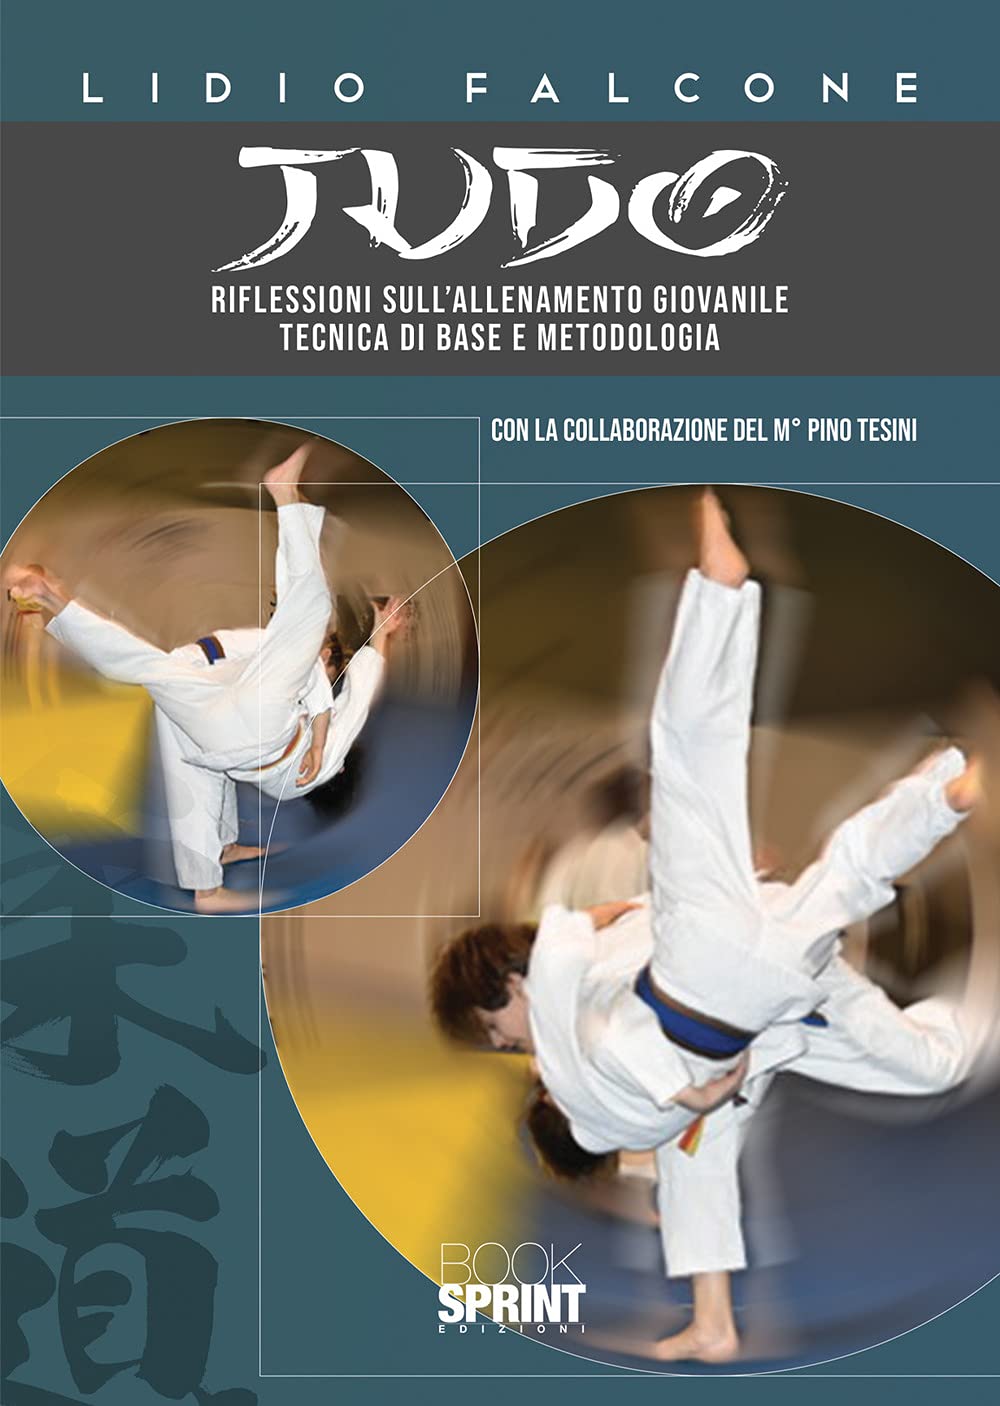 images/pubblicazioni/2021/large/large/Judo-Lidio-Falcone.jpg